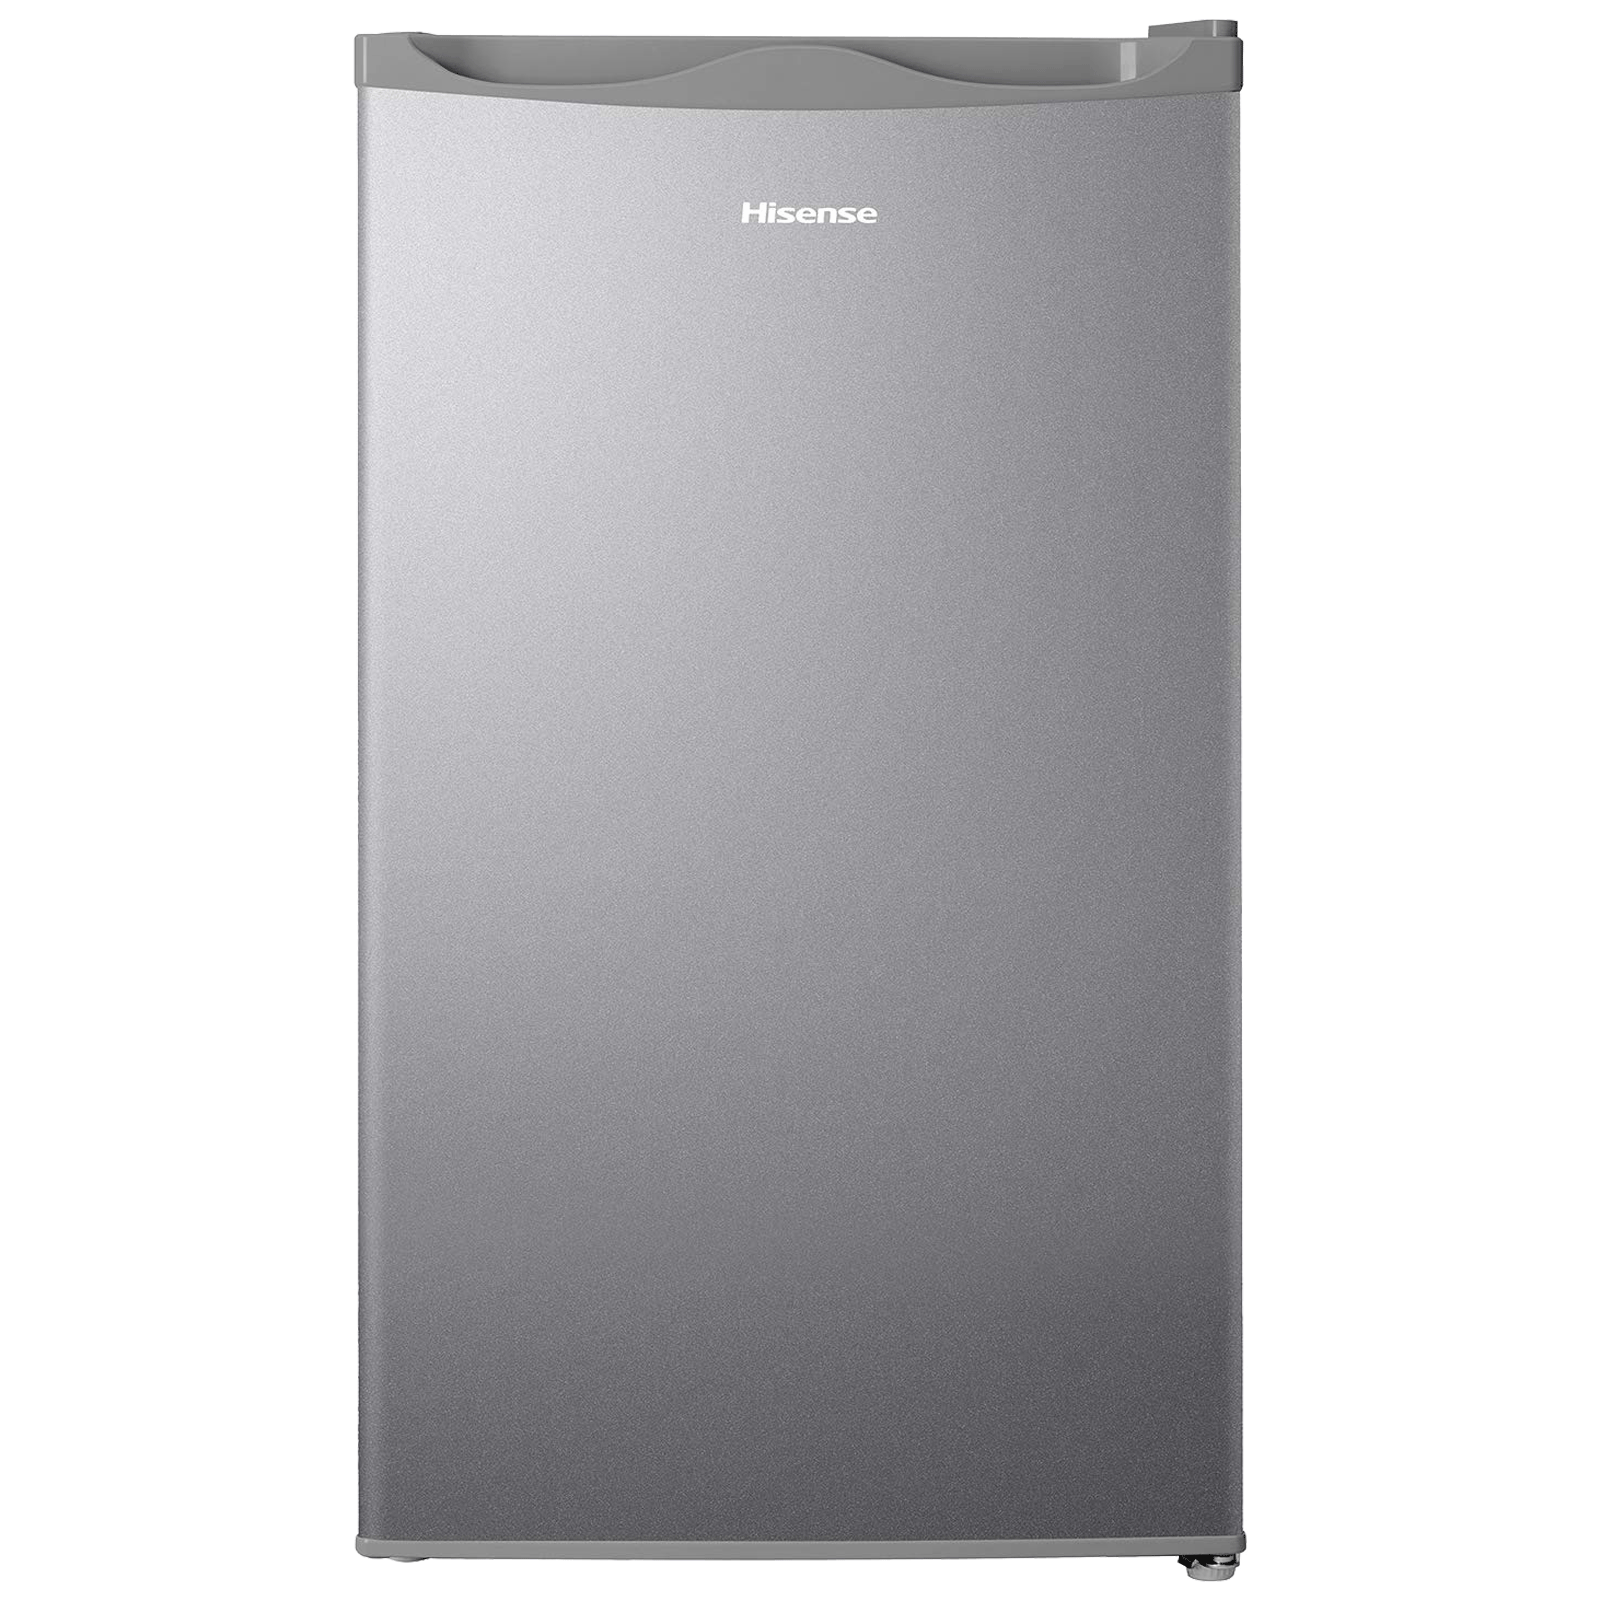 Hisense - Hisense Bedroom Series 93 Liters 1 Star Manual Inverter Single Door Refrigerator (Direct Cooling Technology, RR120D4ASB1, Silver)